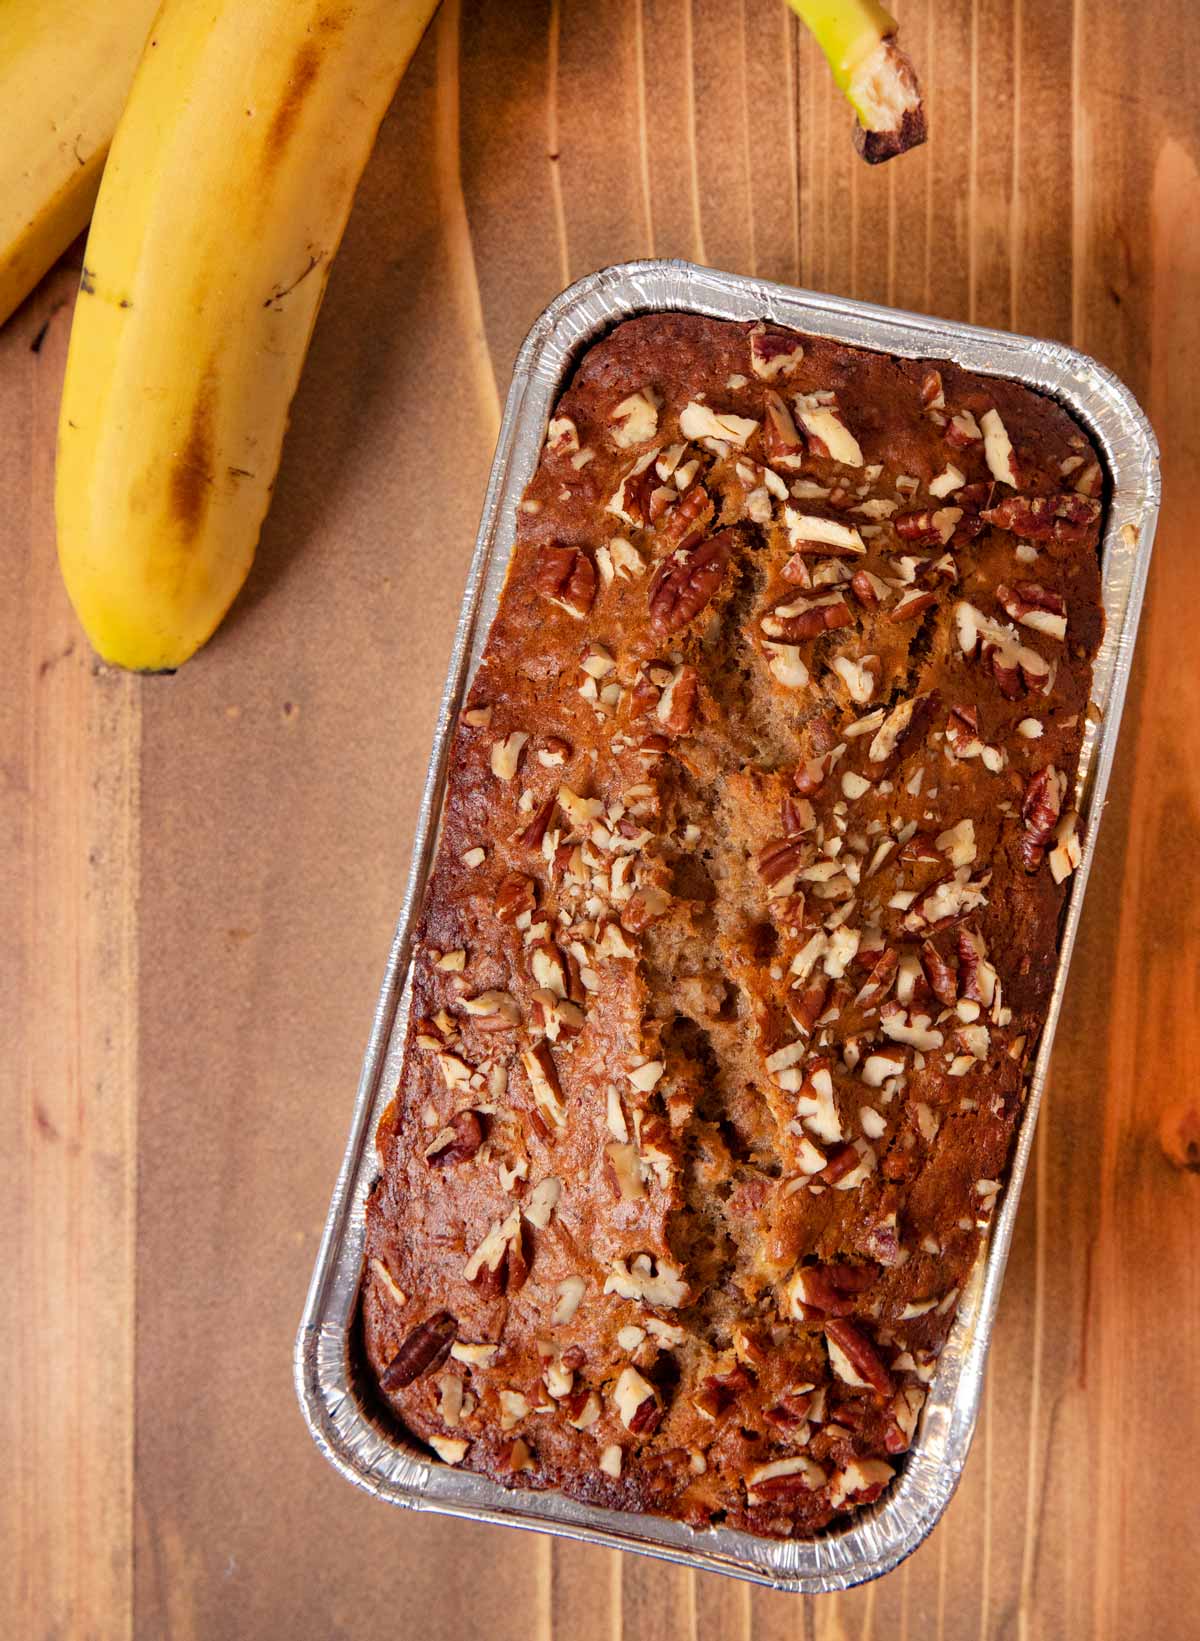 Baked Honey Banana Bread in loaf pan